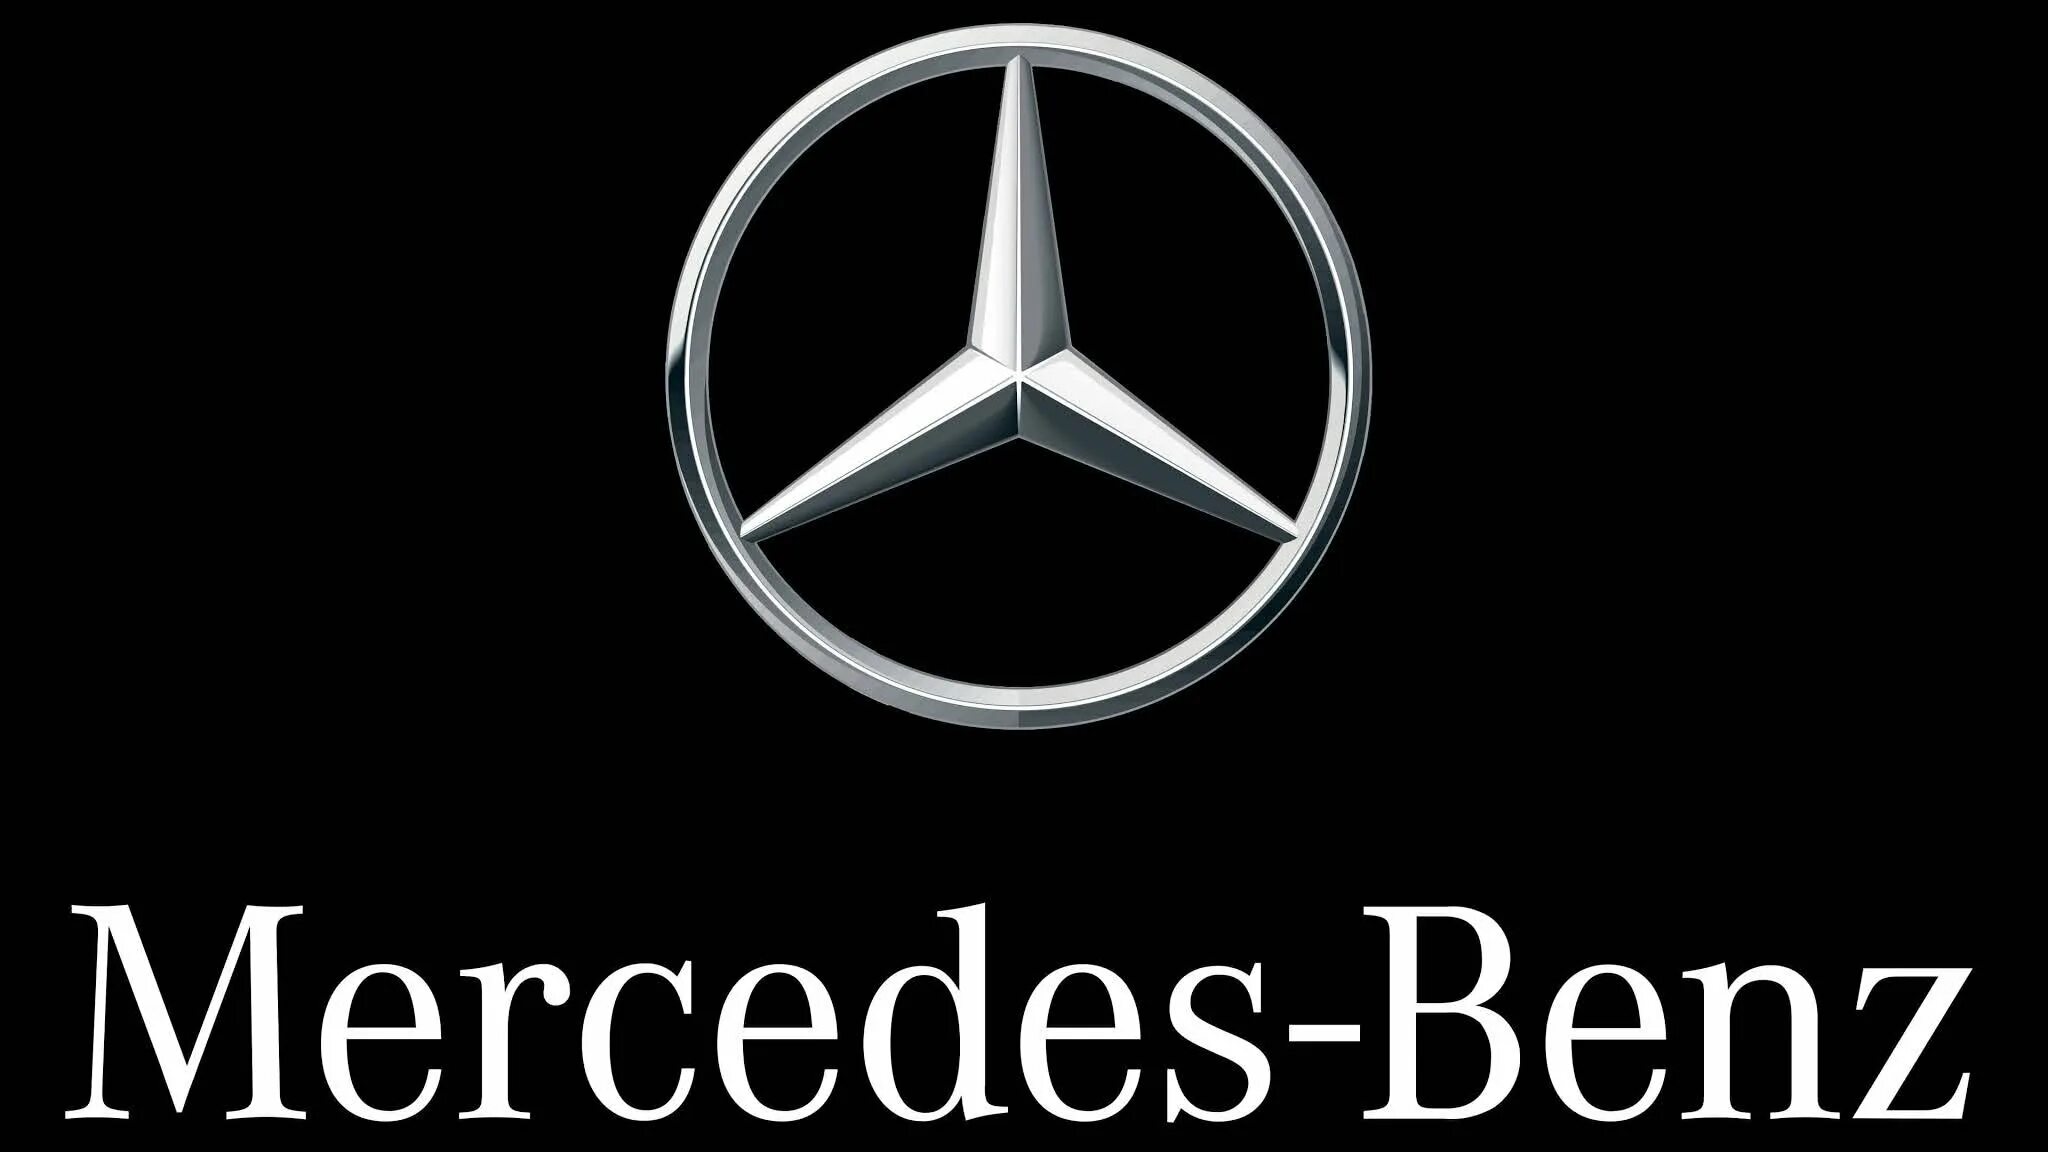 Mercedes Benz logo. Mersedesbenslogo. Мерседес символ. Mercedes Benz надпись. Полное название мерседес